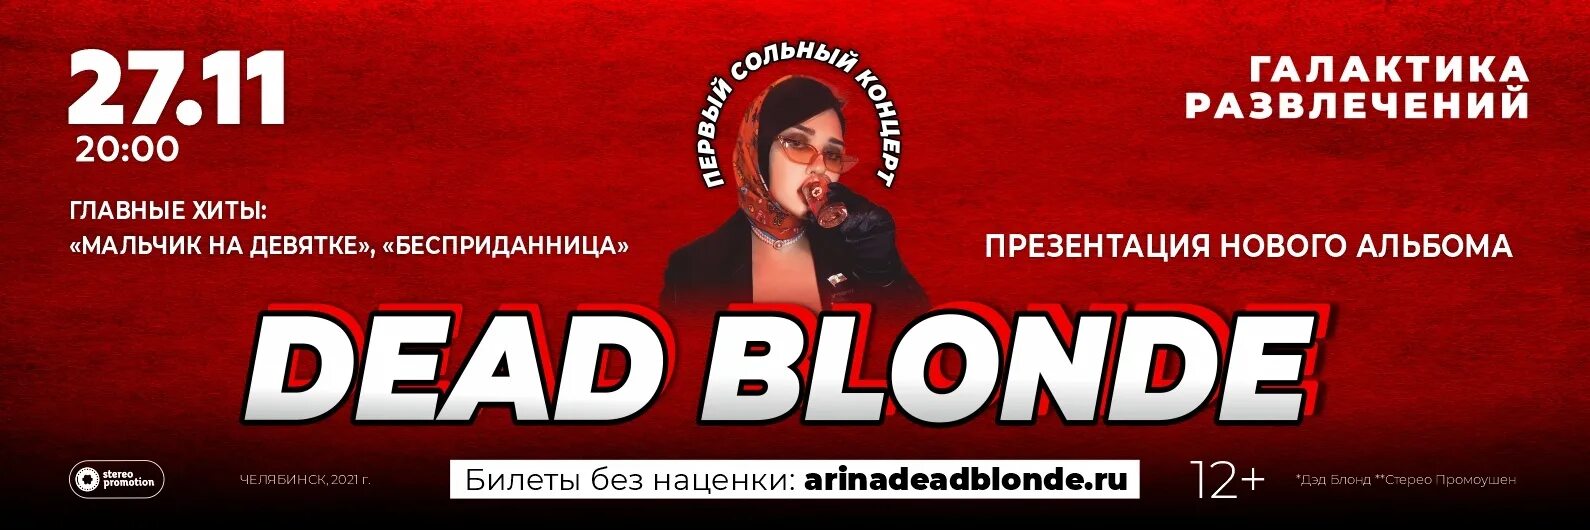 Dead blonde Архангельск.